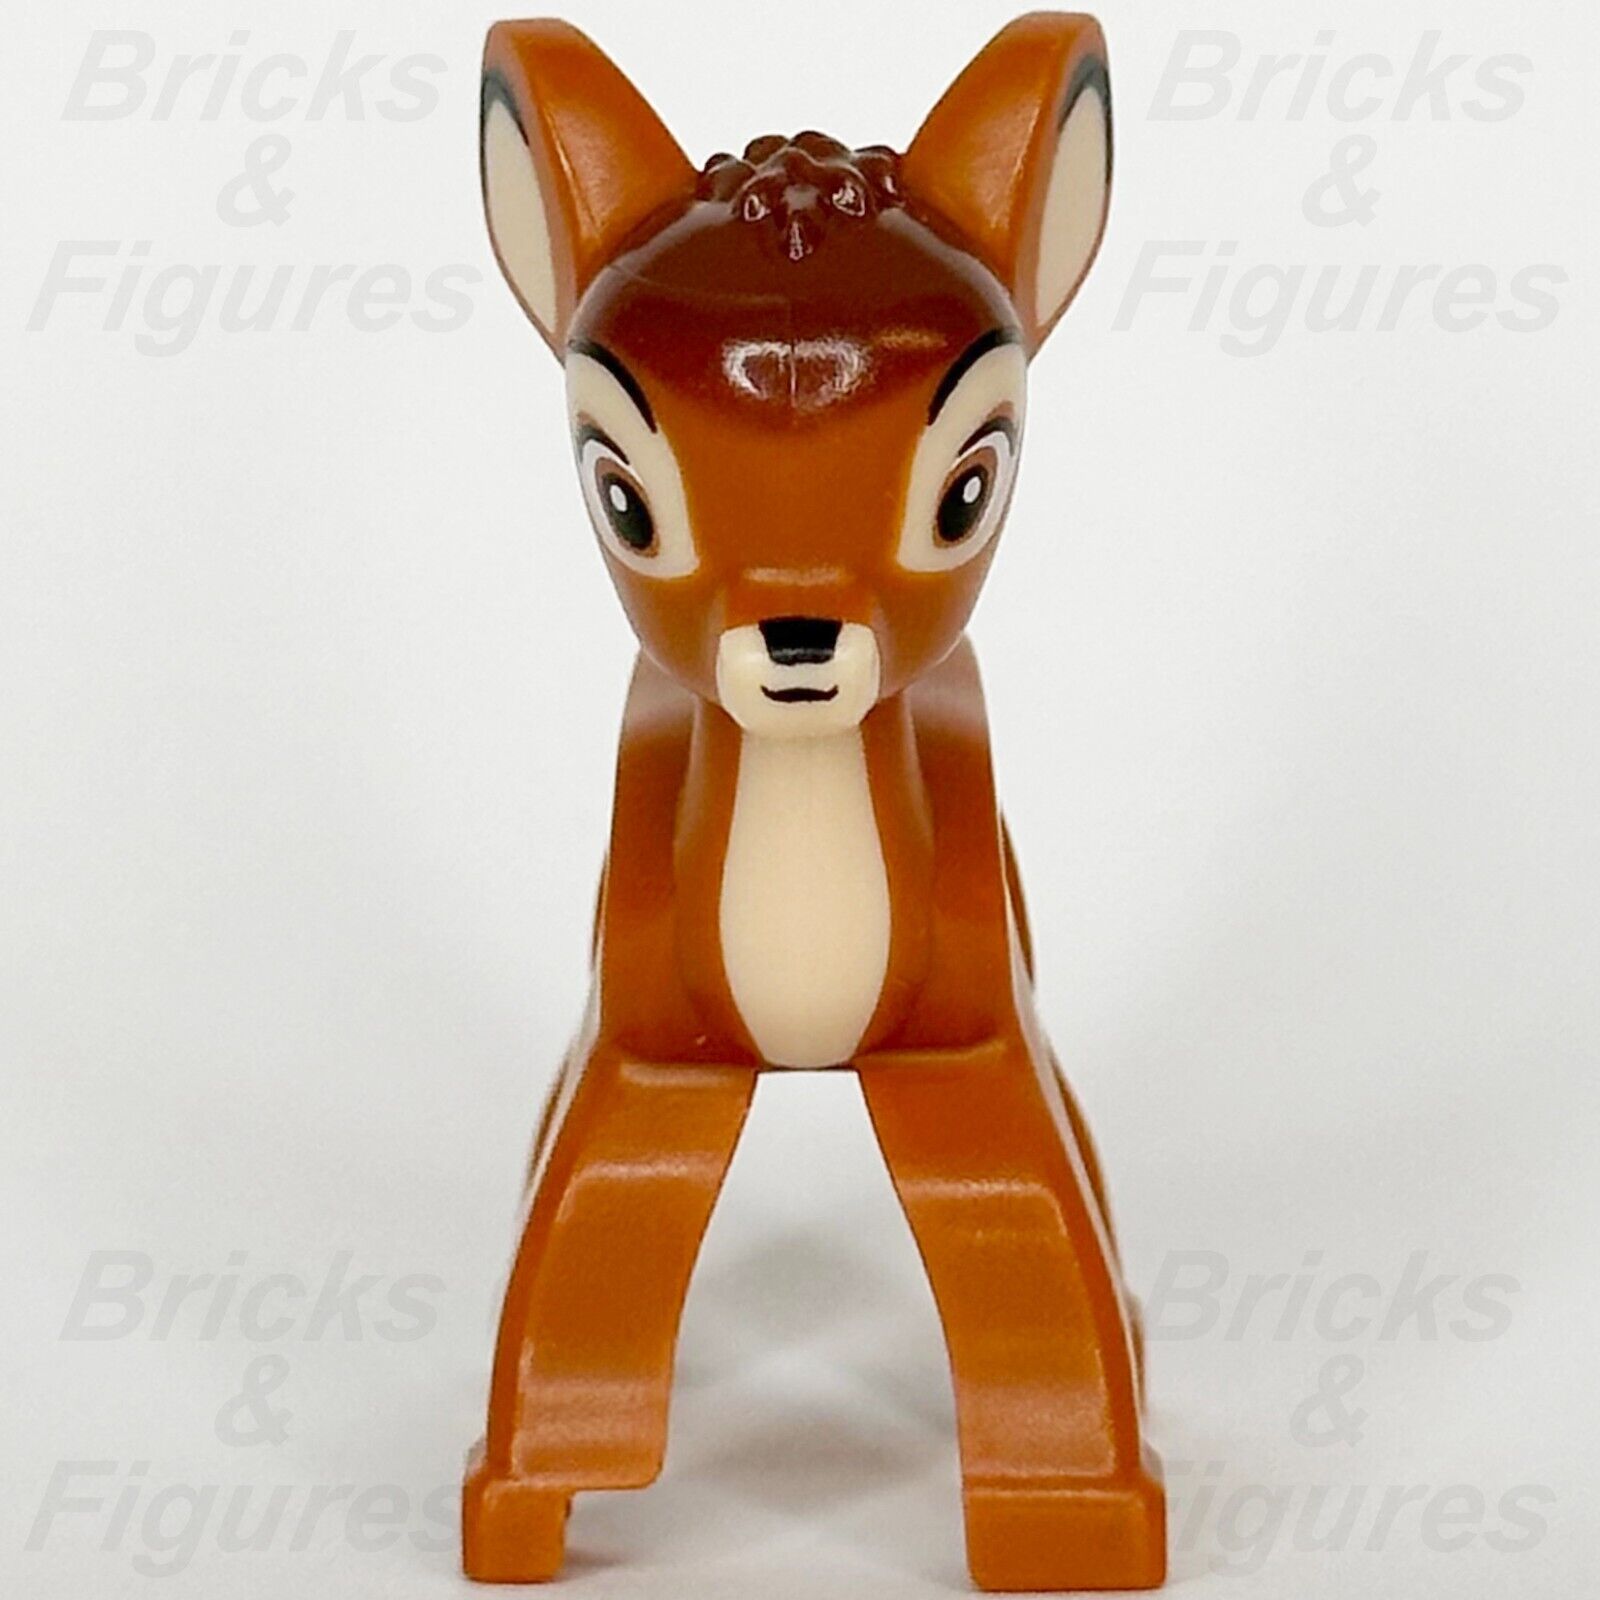 LEGO Disney Bambi Minifigure Deer Animal Part Disney 100 43230 104729pb01